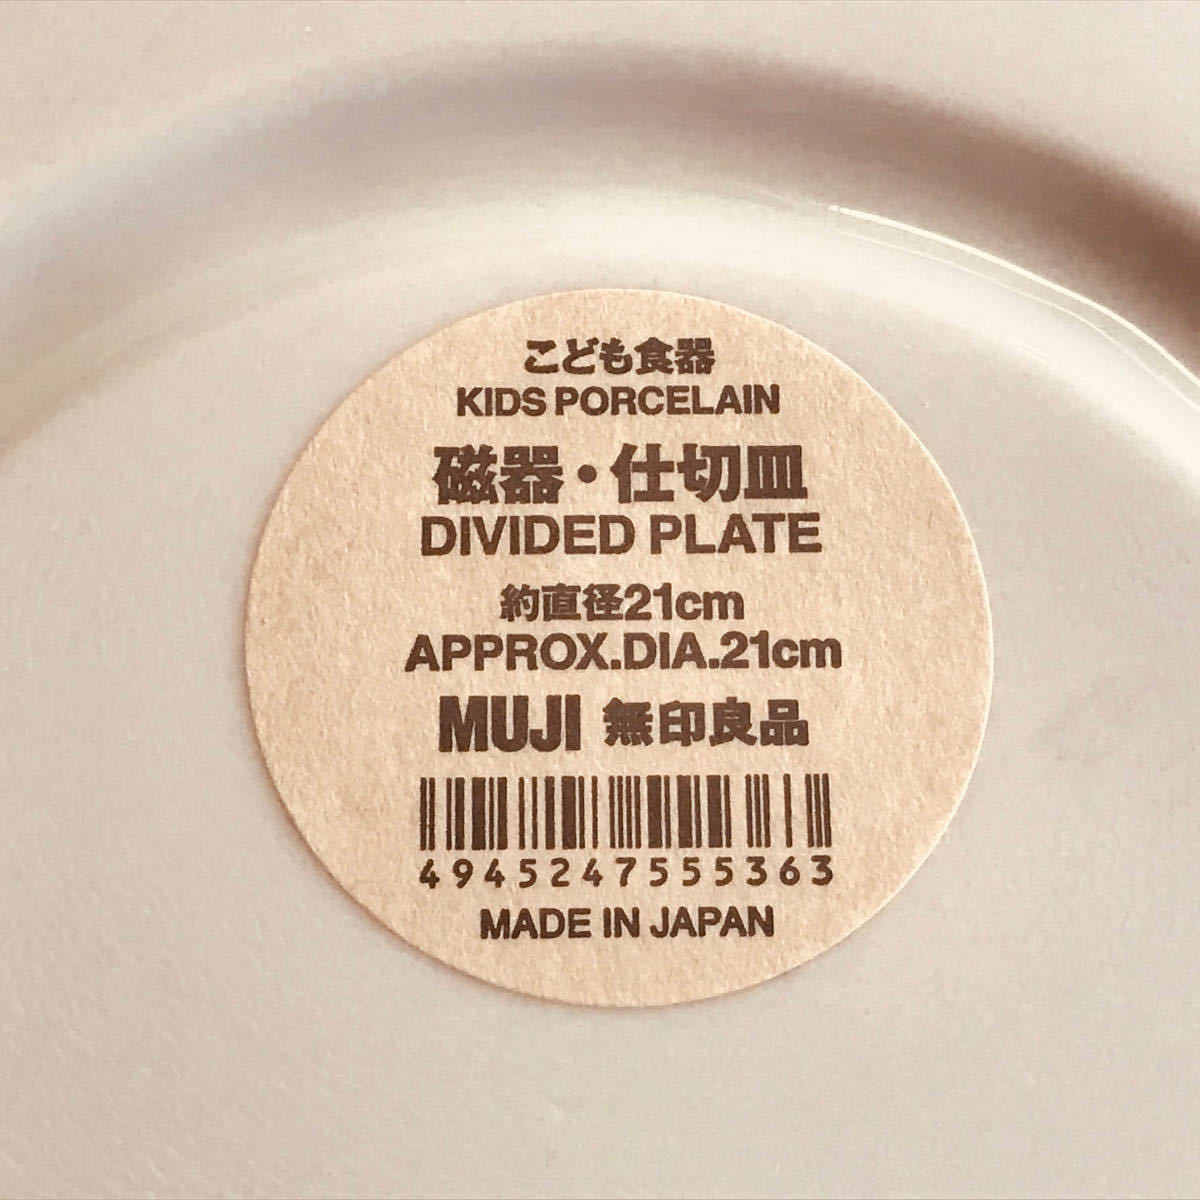  Muji Ryohin ... посуда перегородка тарелка 21cm[ не использовался ]